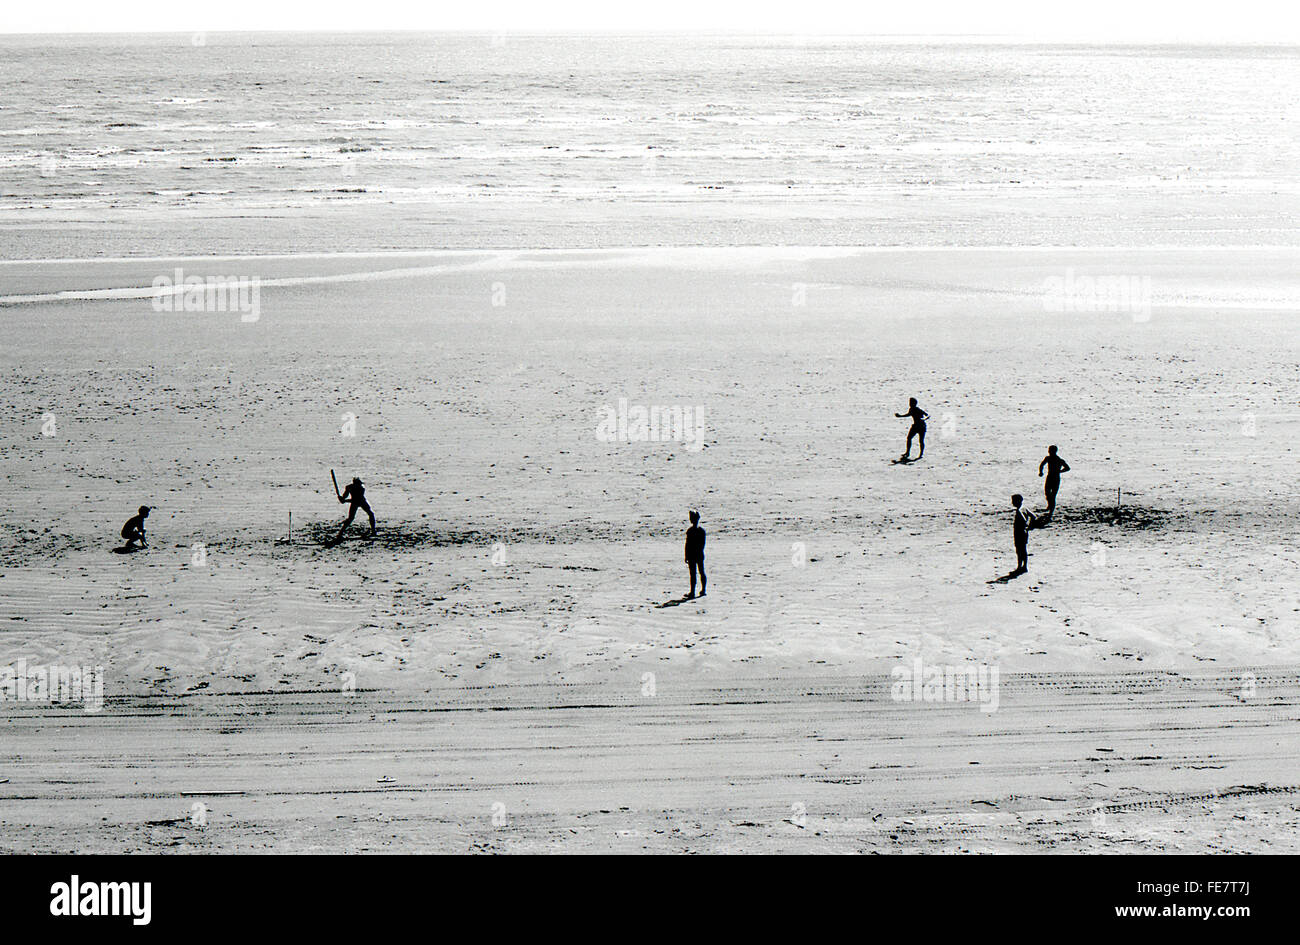 42 Cdo RM R & R playing cricket Aden beach 1967 British withdrawal Stock Photo